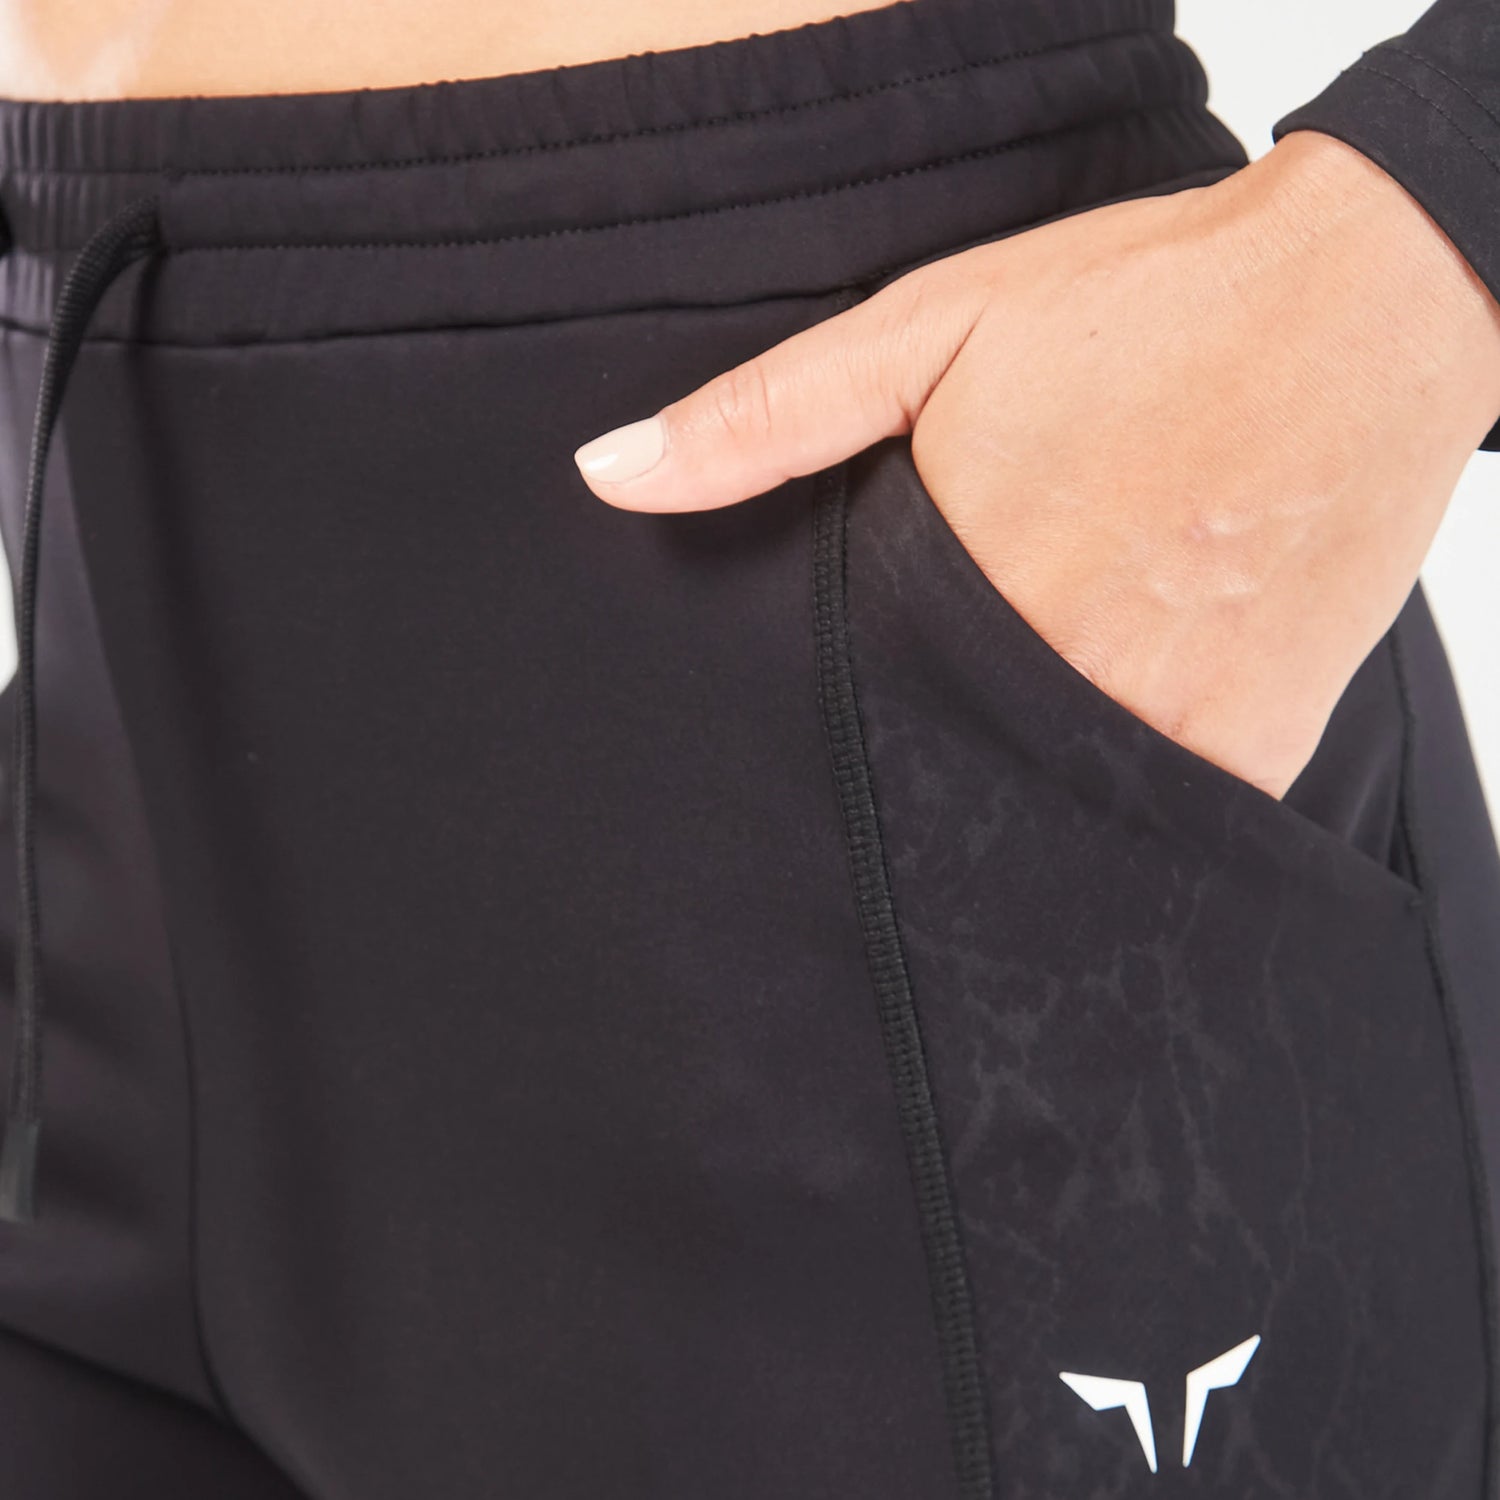 squatwolf-workout-clothes-core-track-pants-black-gym-pants-for-women